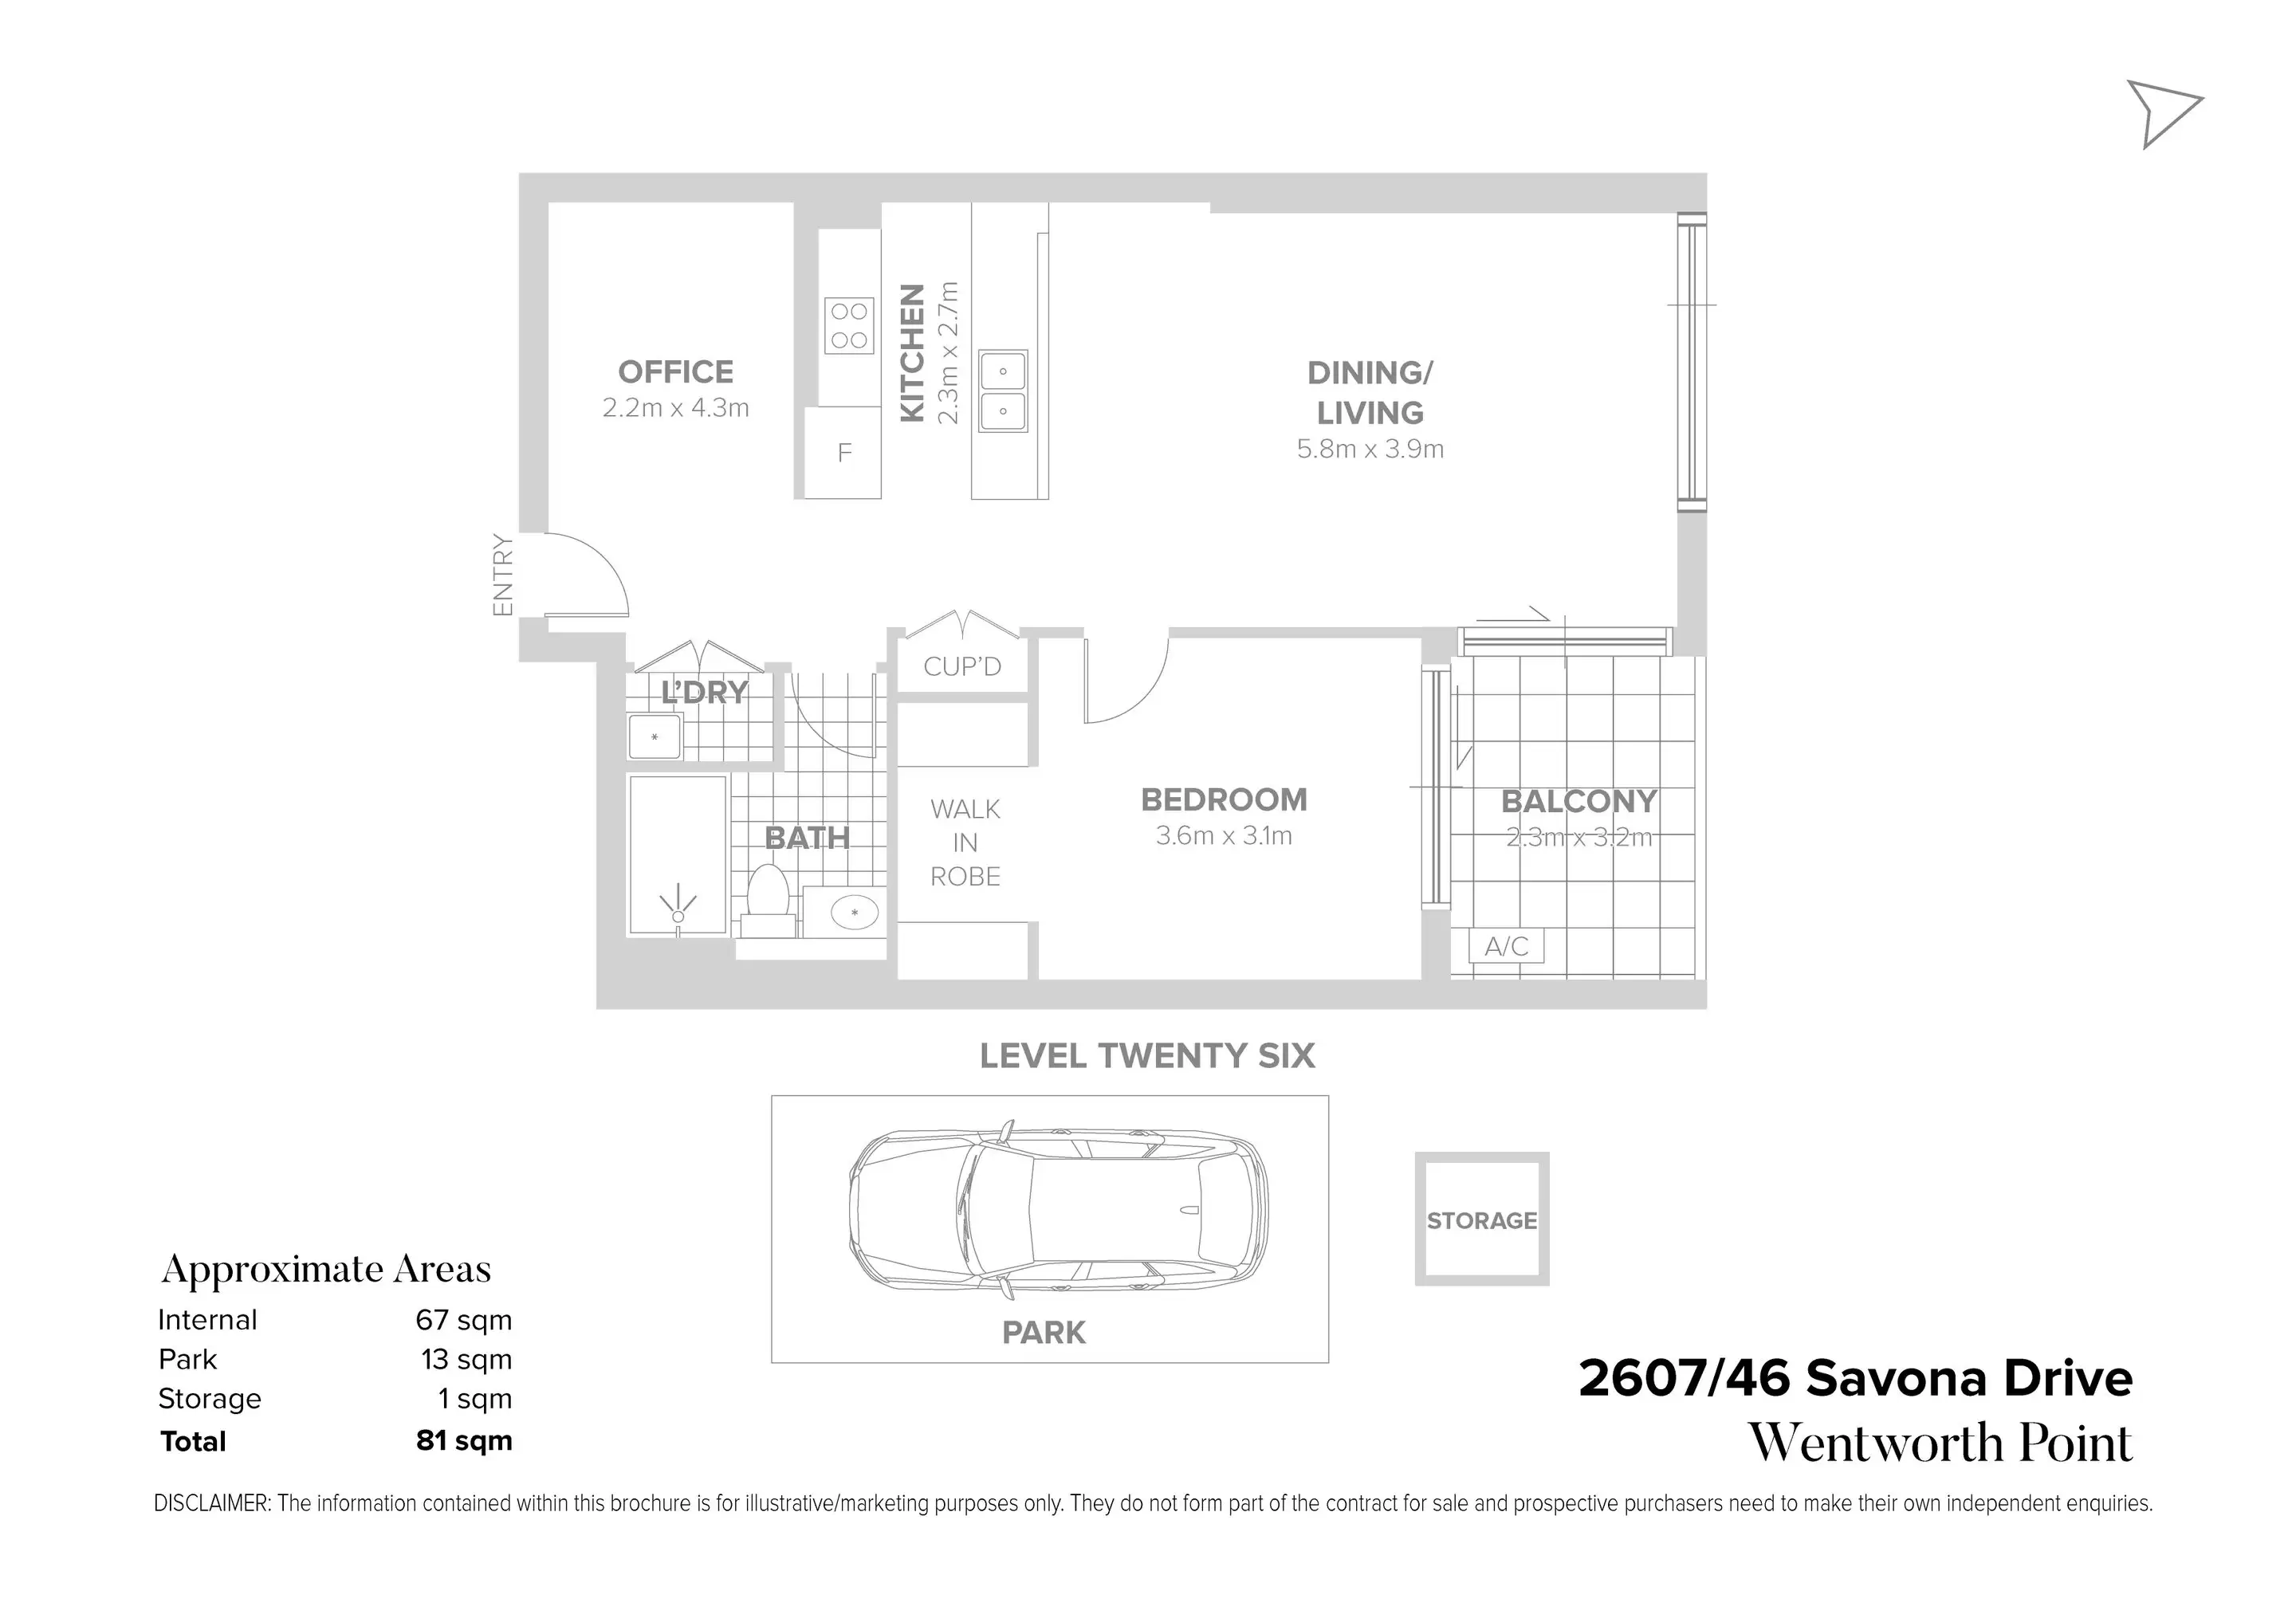 2607/46 Savona Drive, Wentworth Point Sold by Chidiac Realty - floorplan